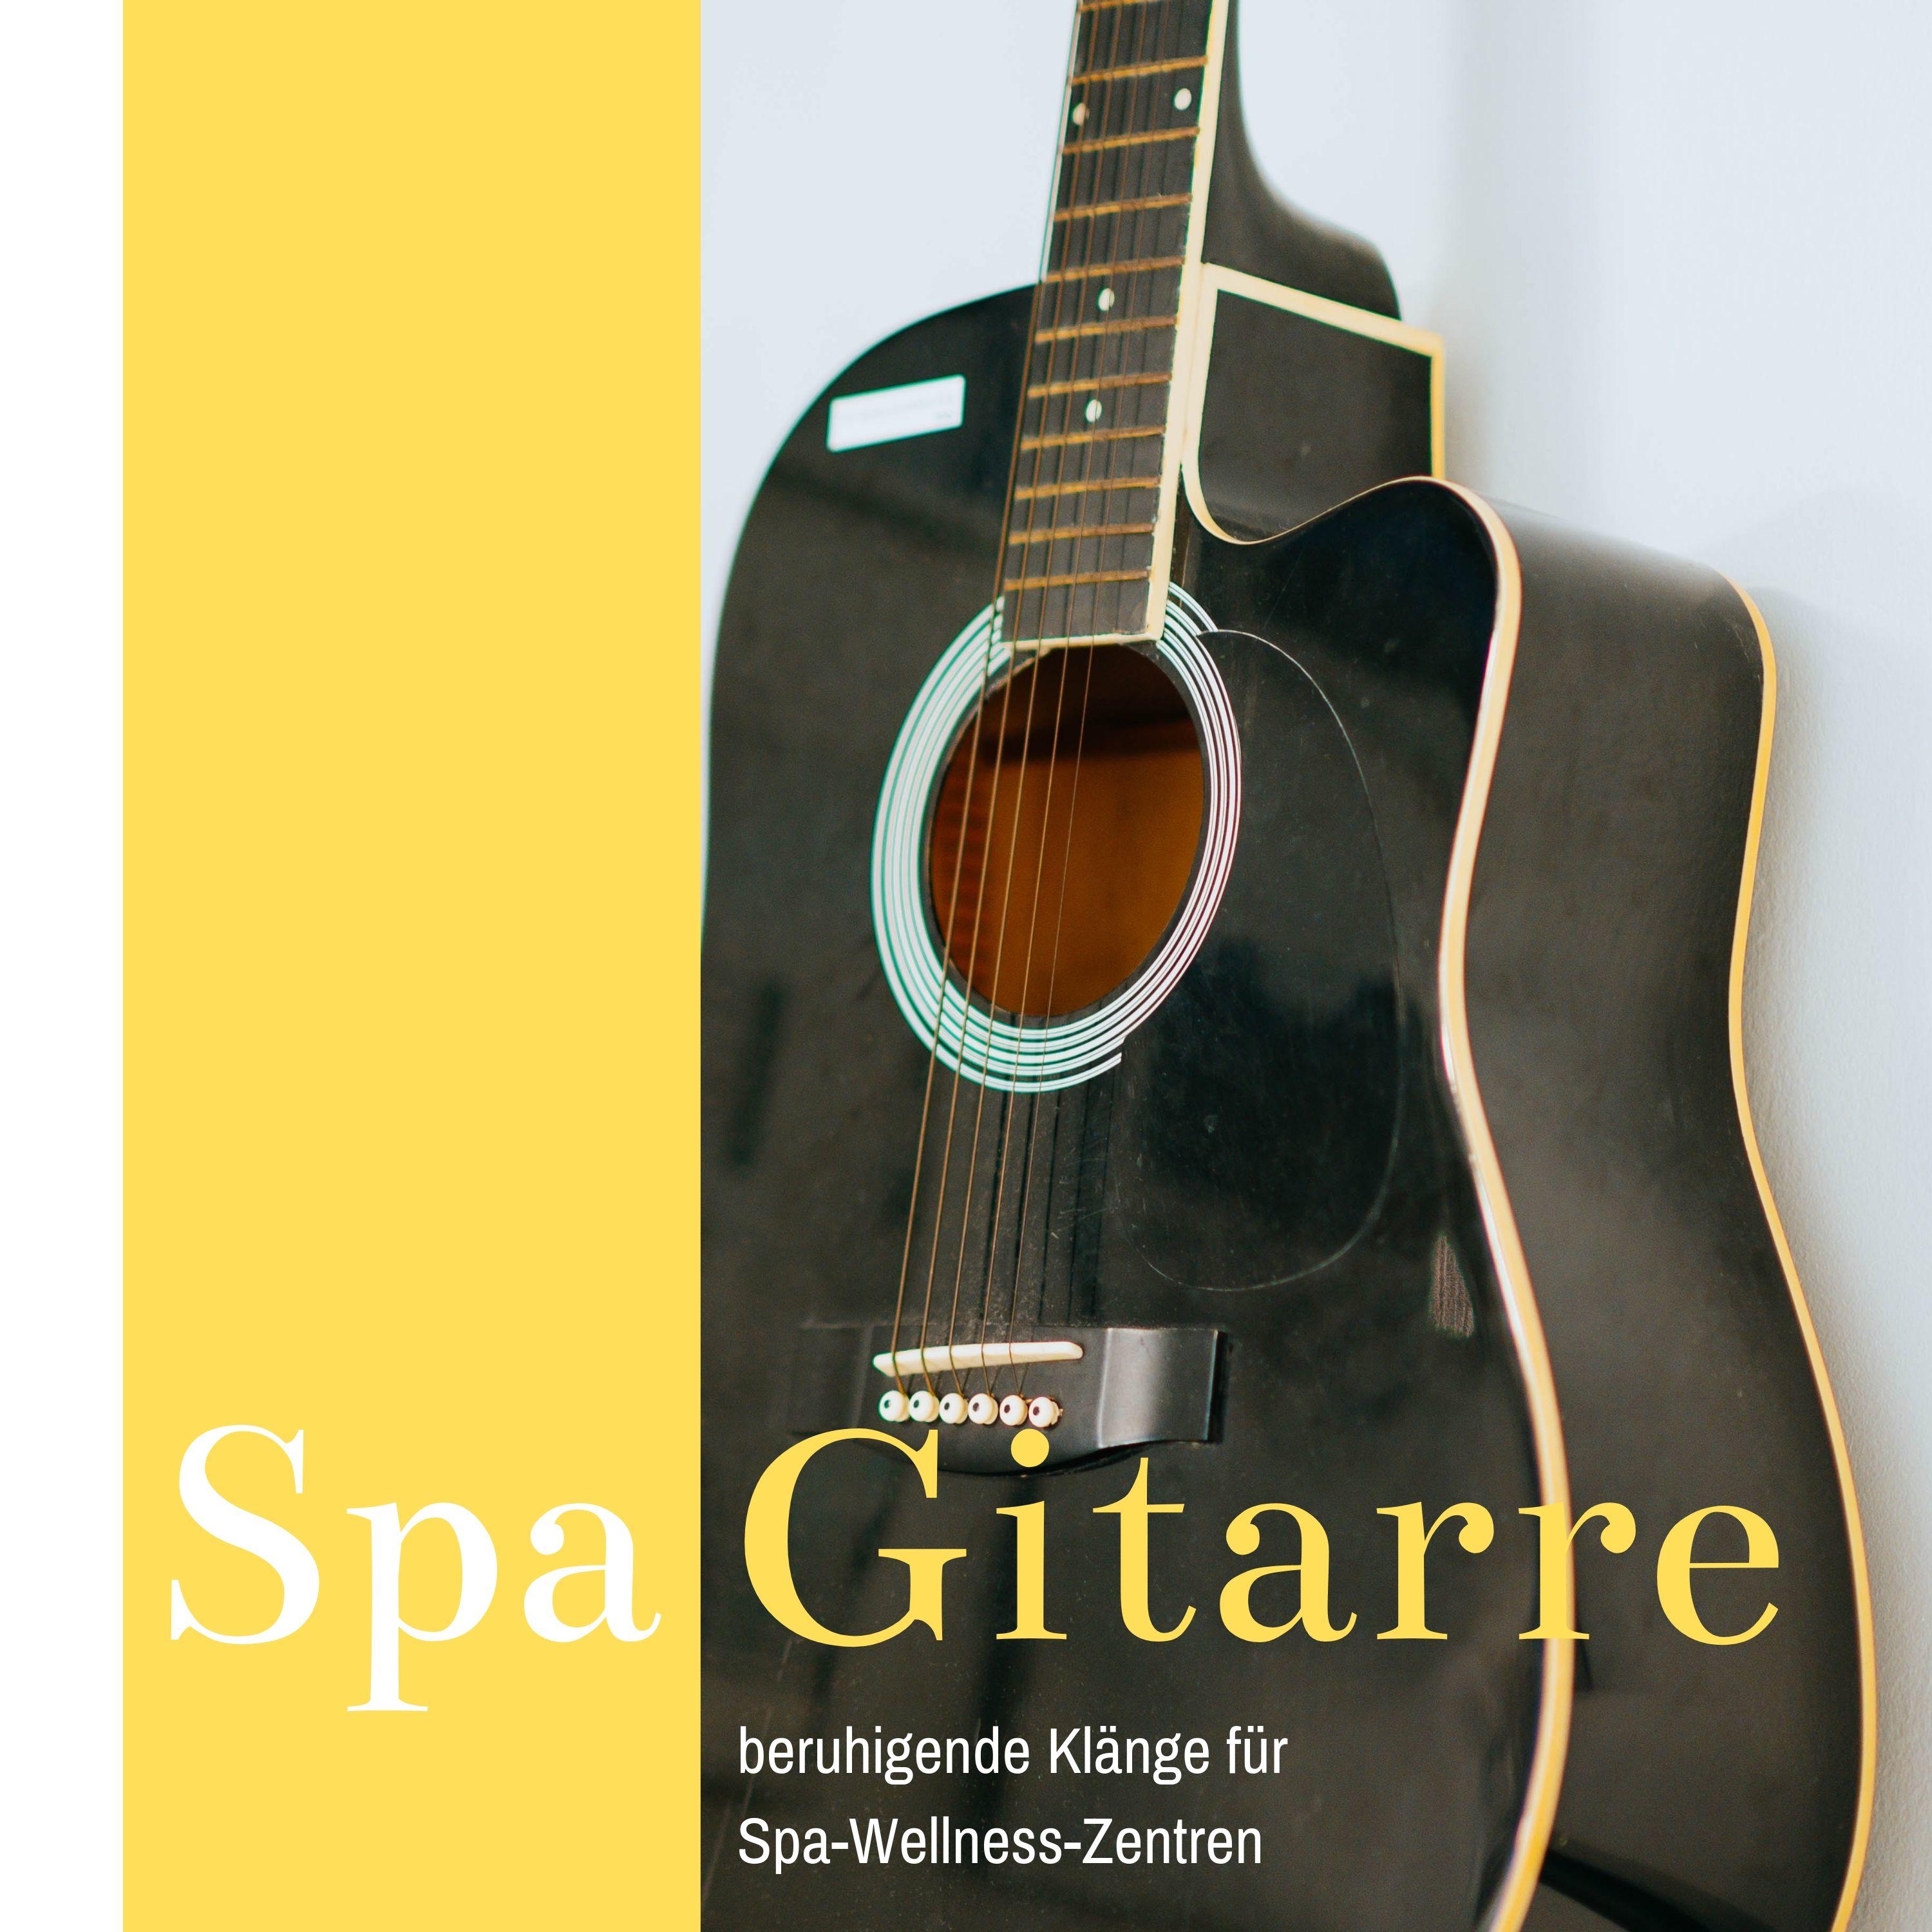 Spa Gitarre CD: beruhigende Kl nge fü r SpaWellnessZentren